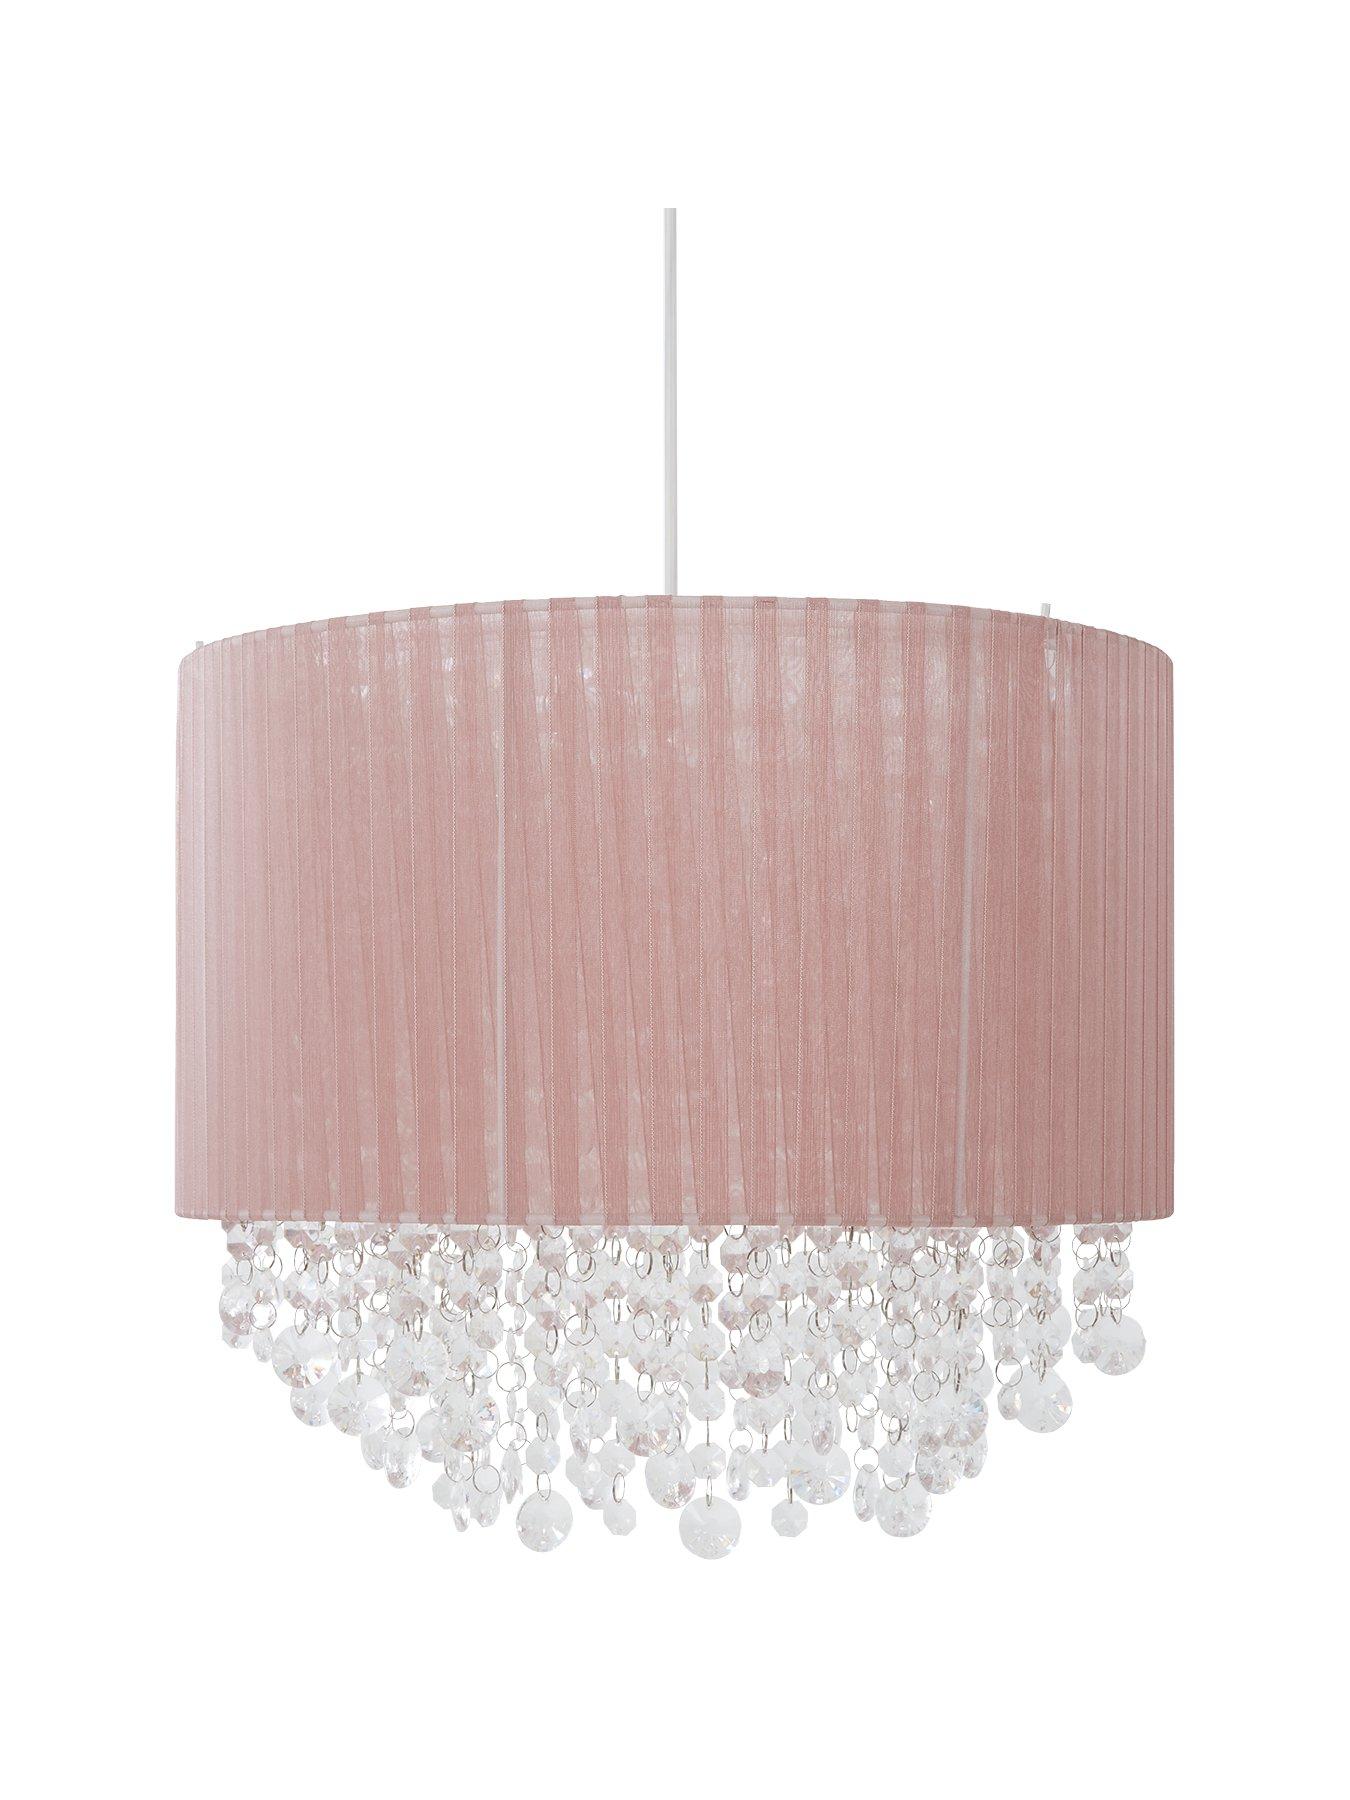 light pink lamp shade for nursery